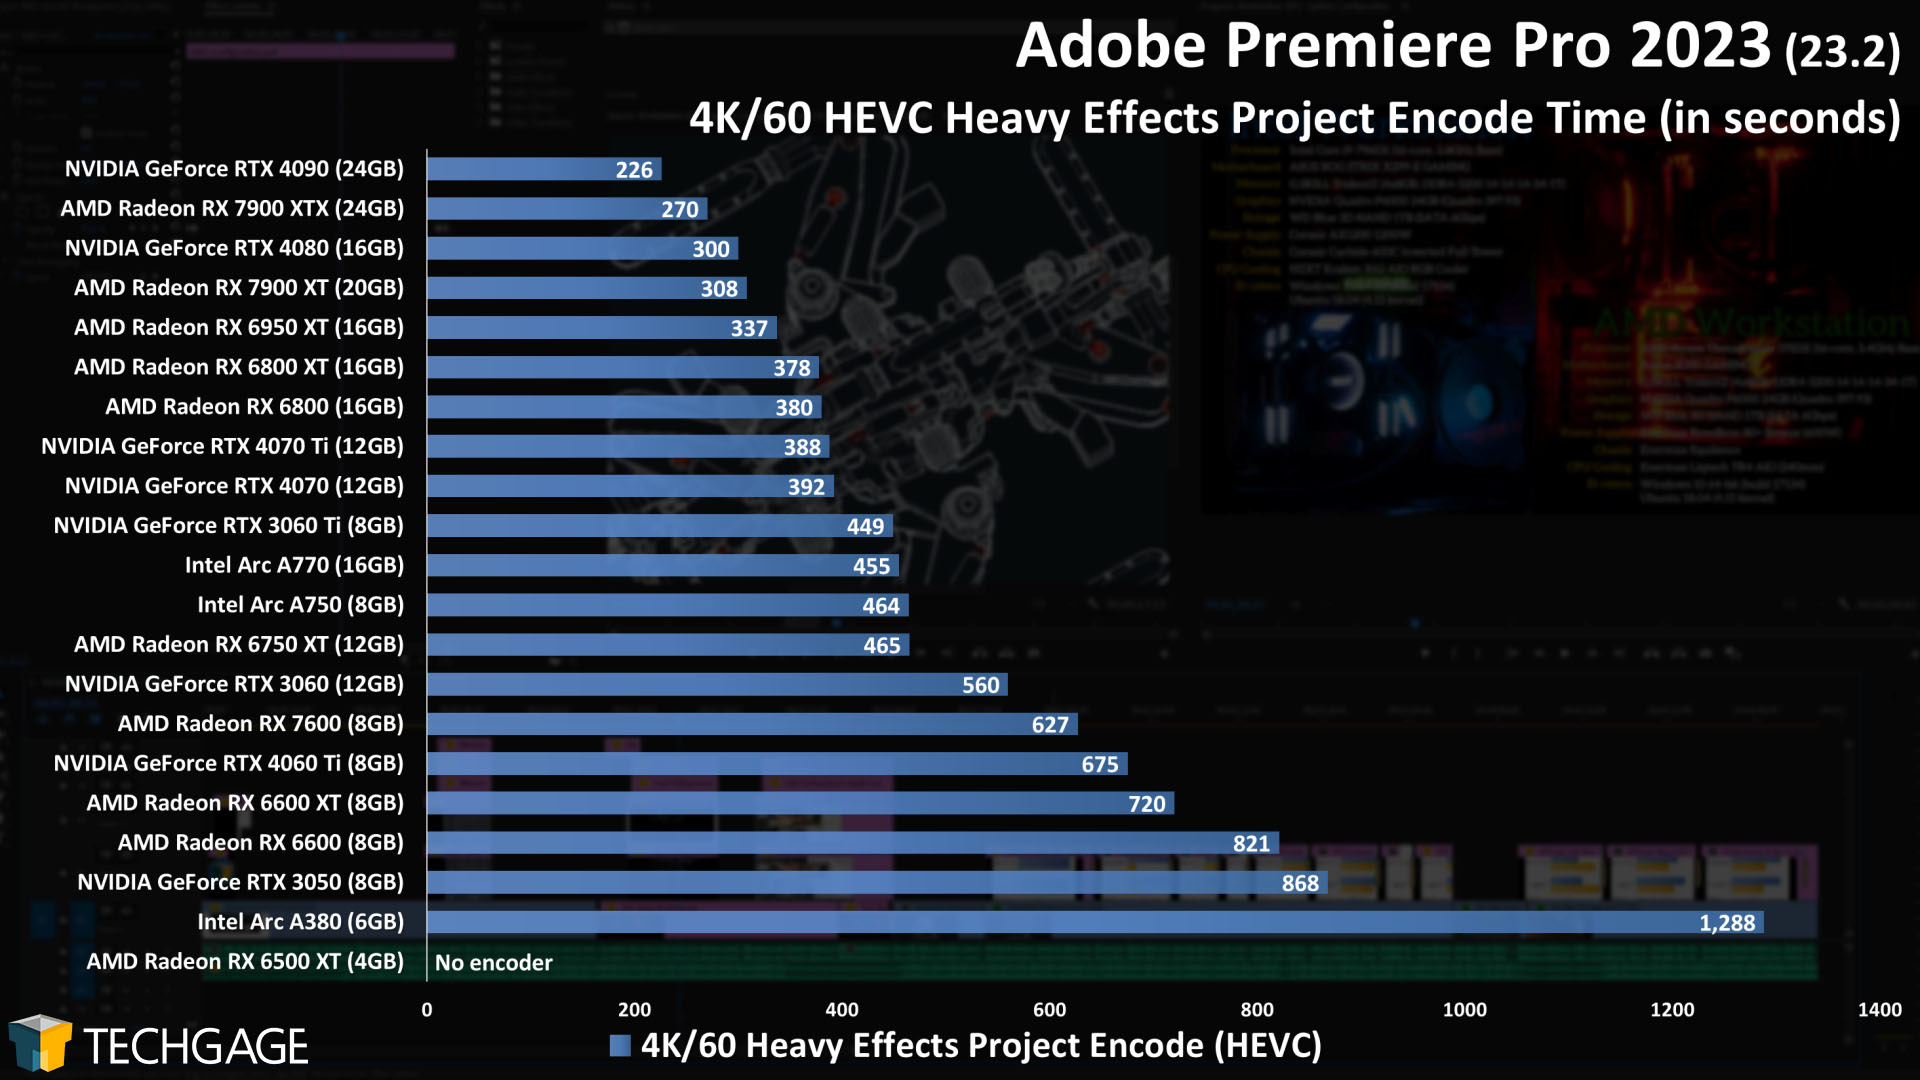 Adobe Premiere Pro - GPU Encoding Performance (4K60 Heavy Effects)